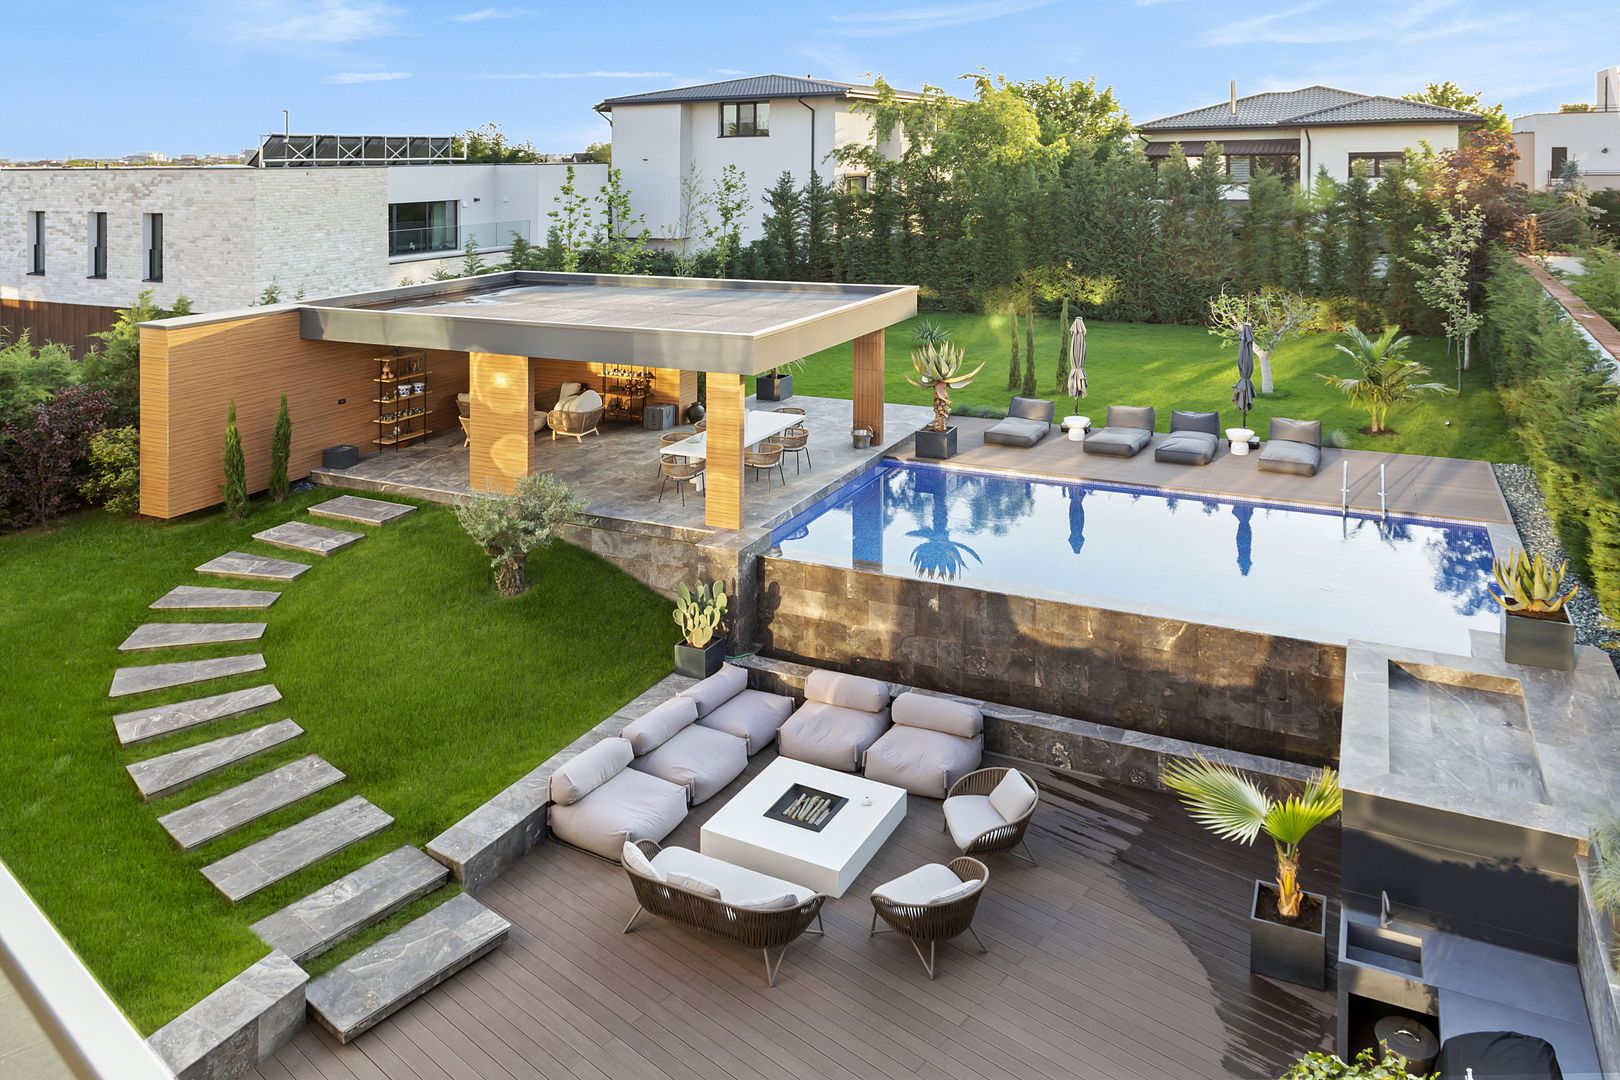 OFFLINE Modern New Villa For Sale Iancu Nicolae Pipera